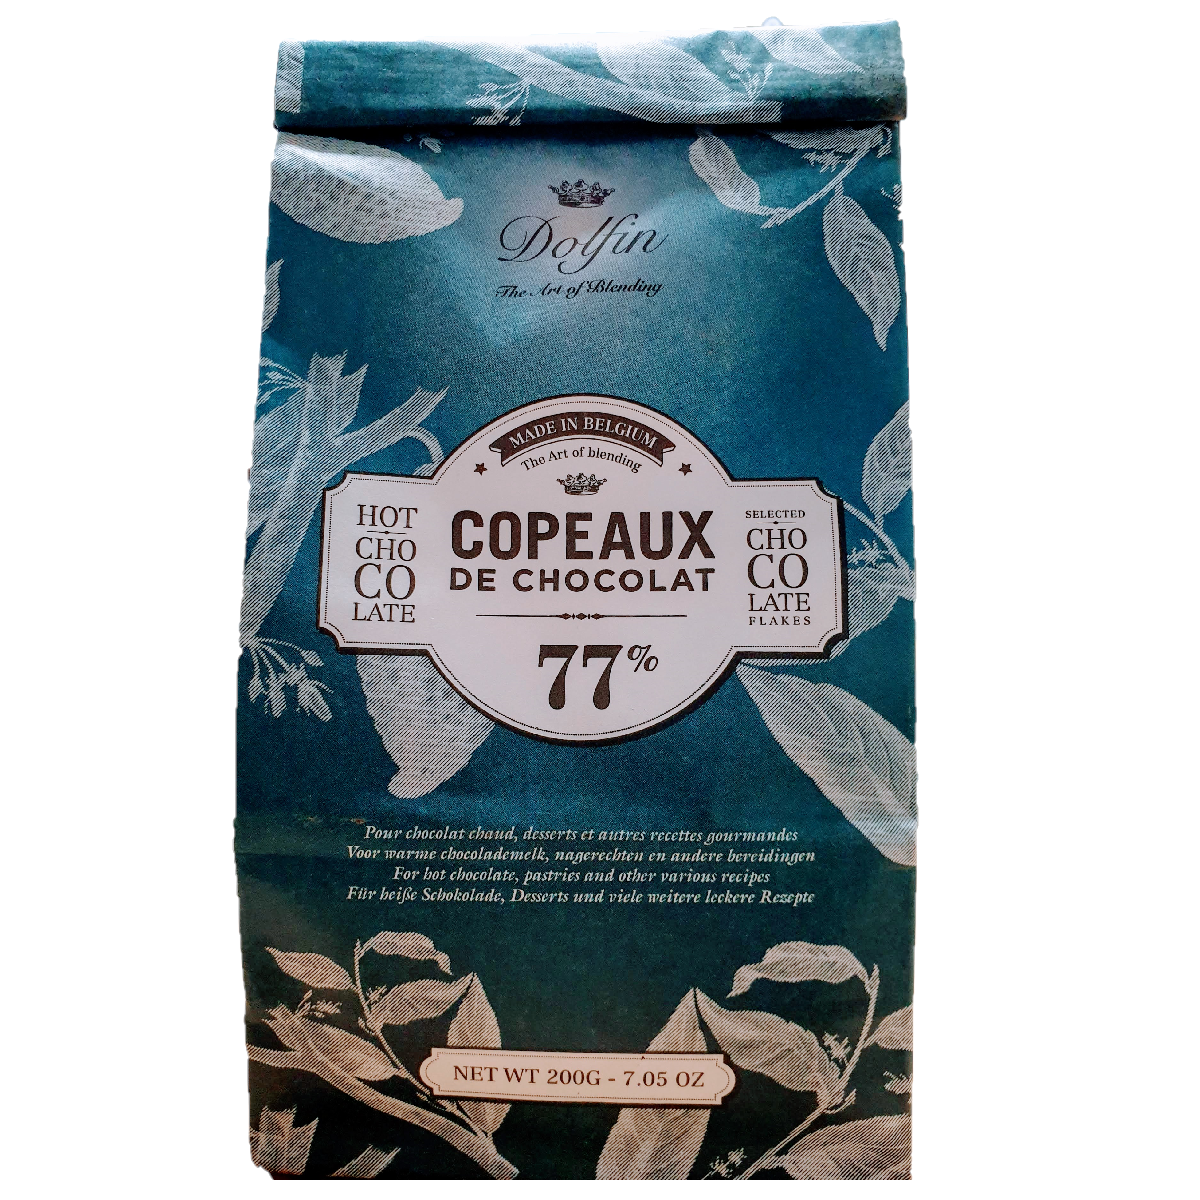 Dolfin Copeaux de Chocolat 77% 200g - Ardkeen Quality Food Store